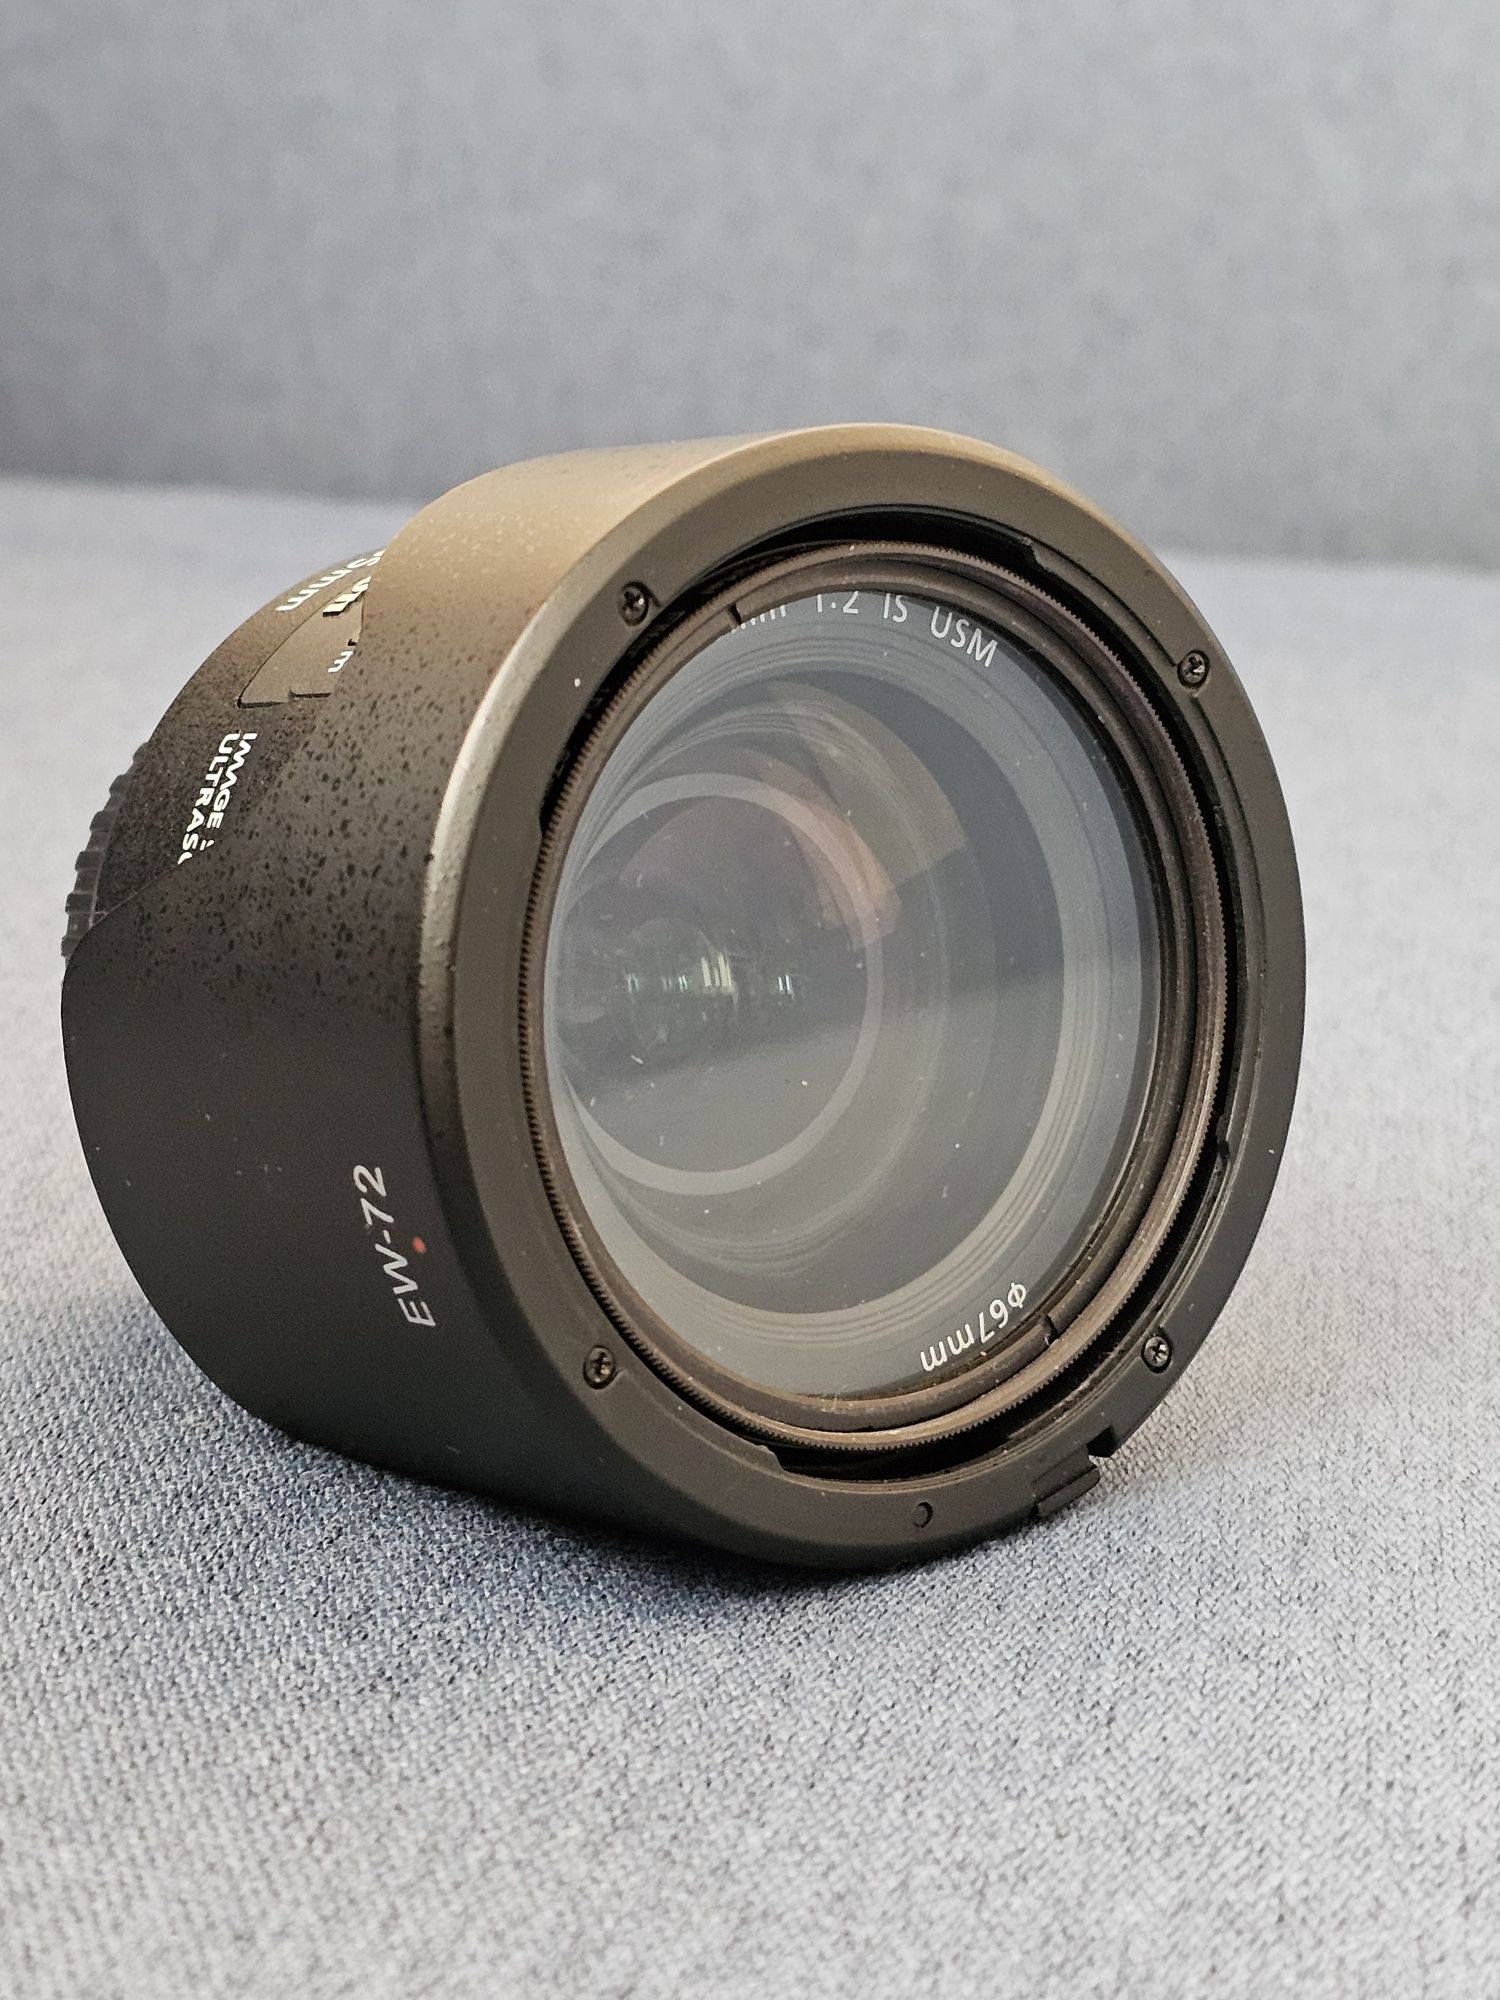 Продам фото об'єктив Canon EF 35mm f/2 IS USM